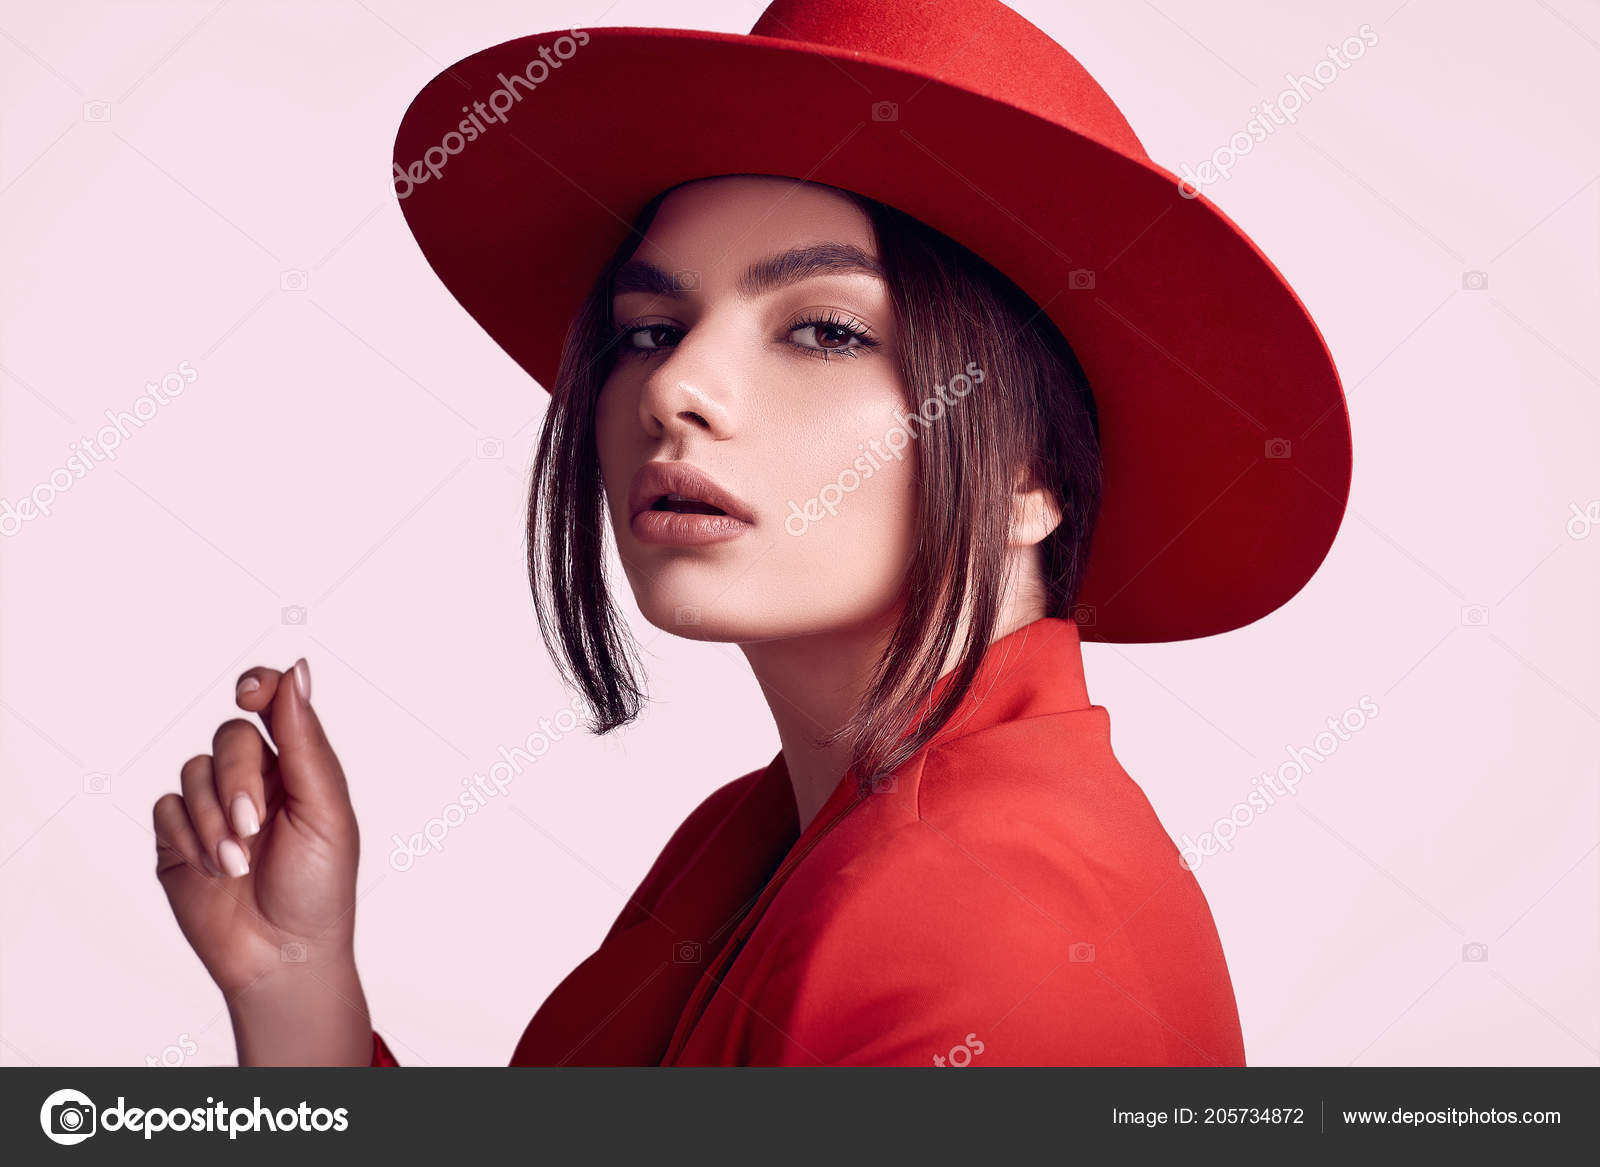 https://st4.depositphotos.com/3250631/20573/i/1600/depositphotos_205734872-stock-photo-portrait-elegant-beautiful-woman-red.jpg